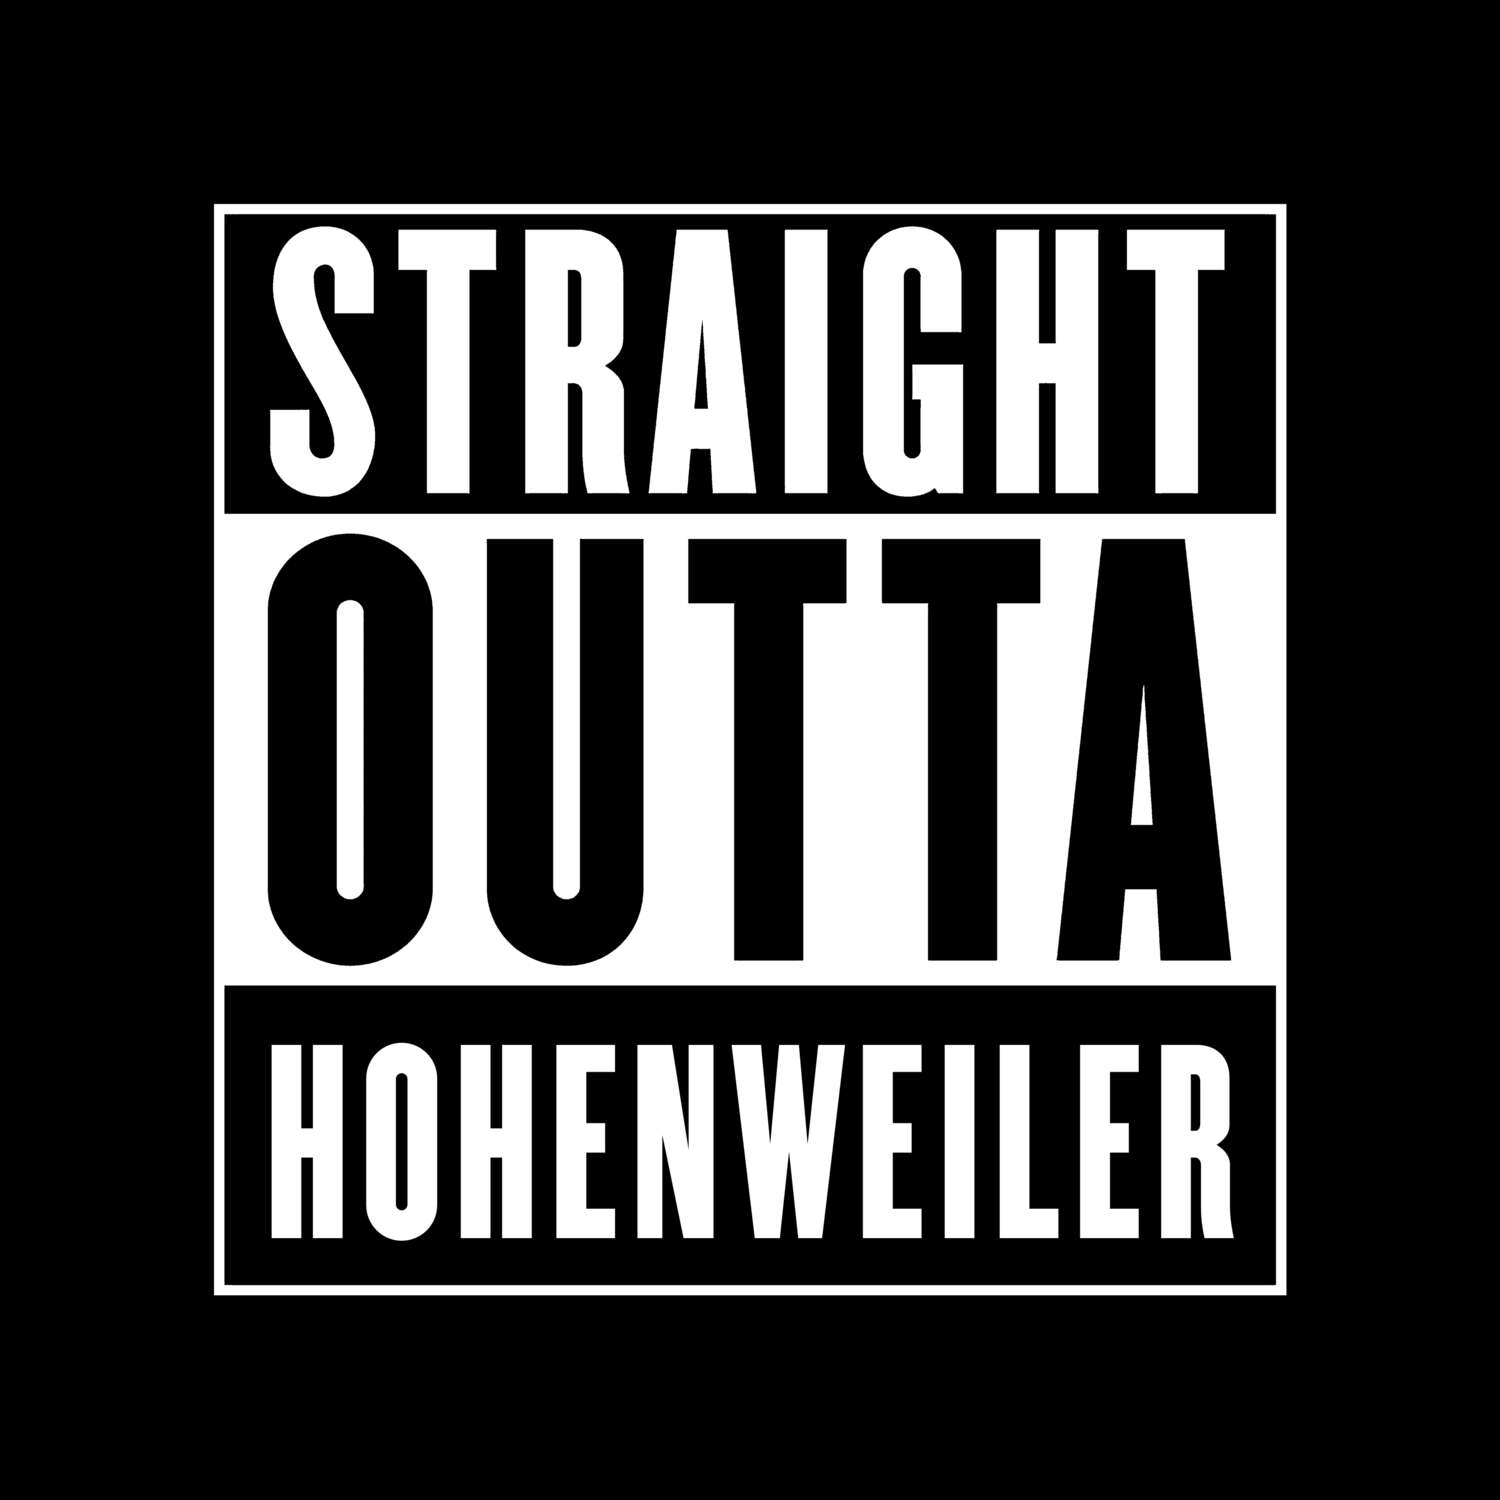 Hohenweiler T-Shirt »Straight Outta«